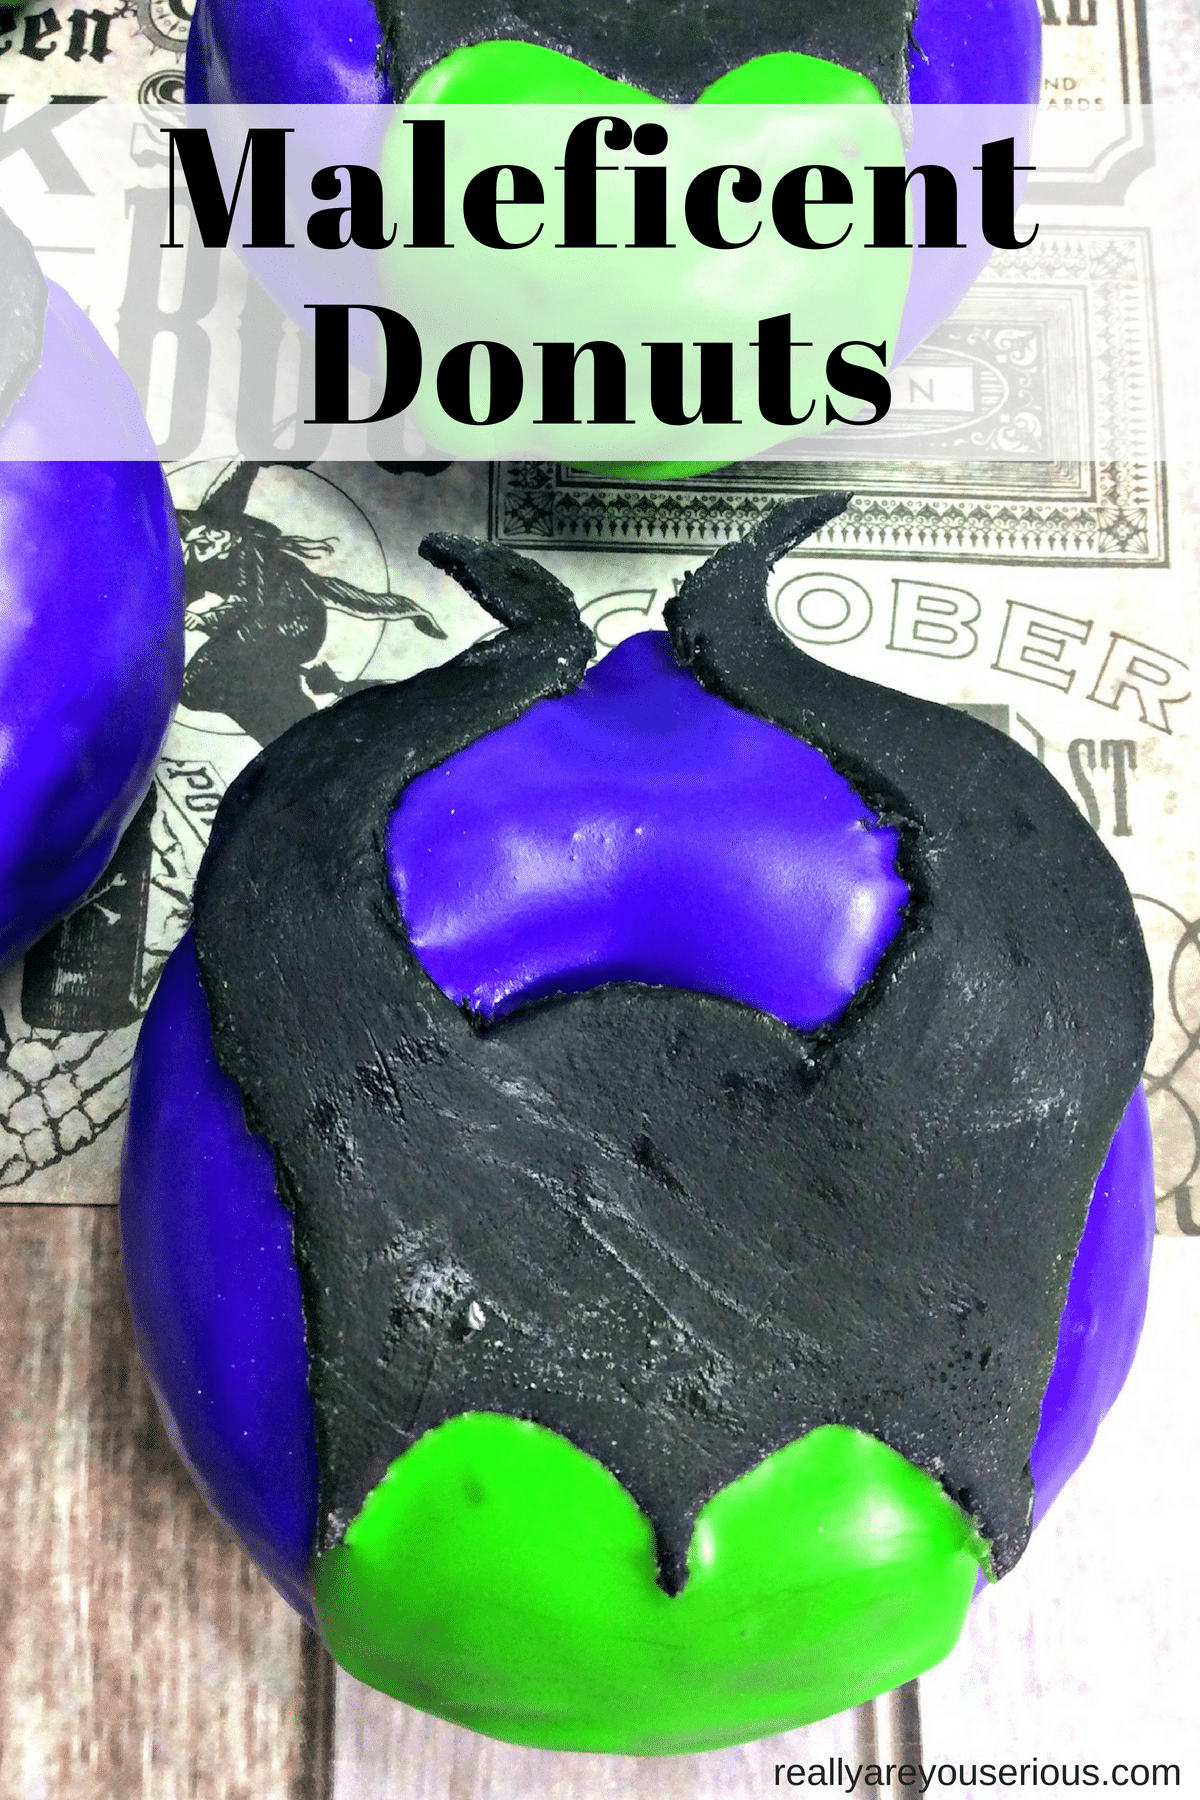 Maleficent donuts